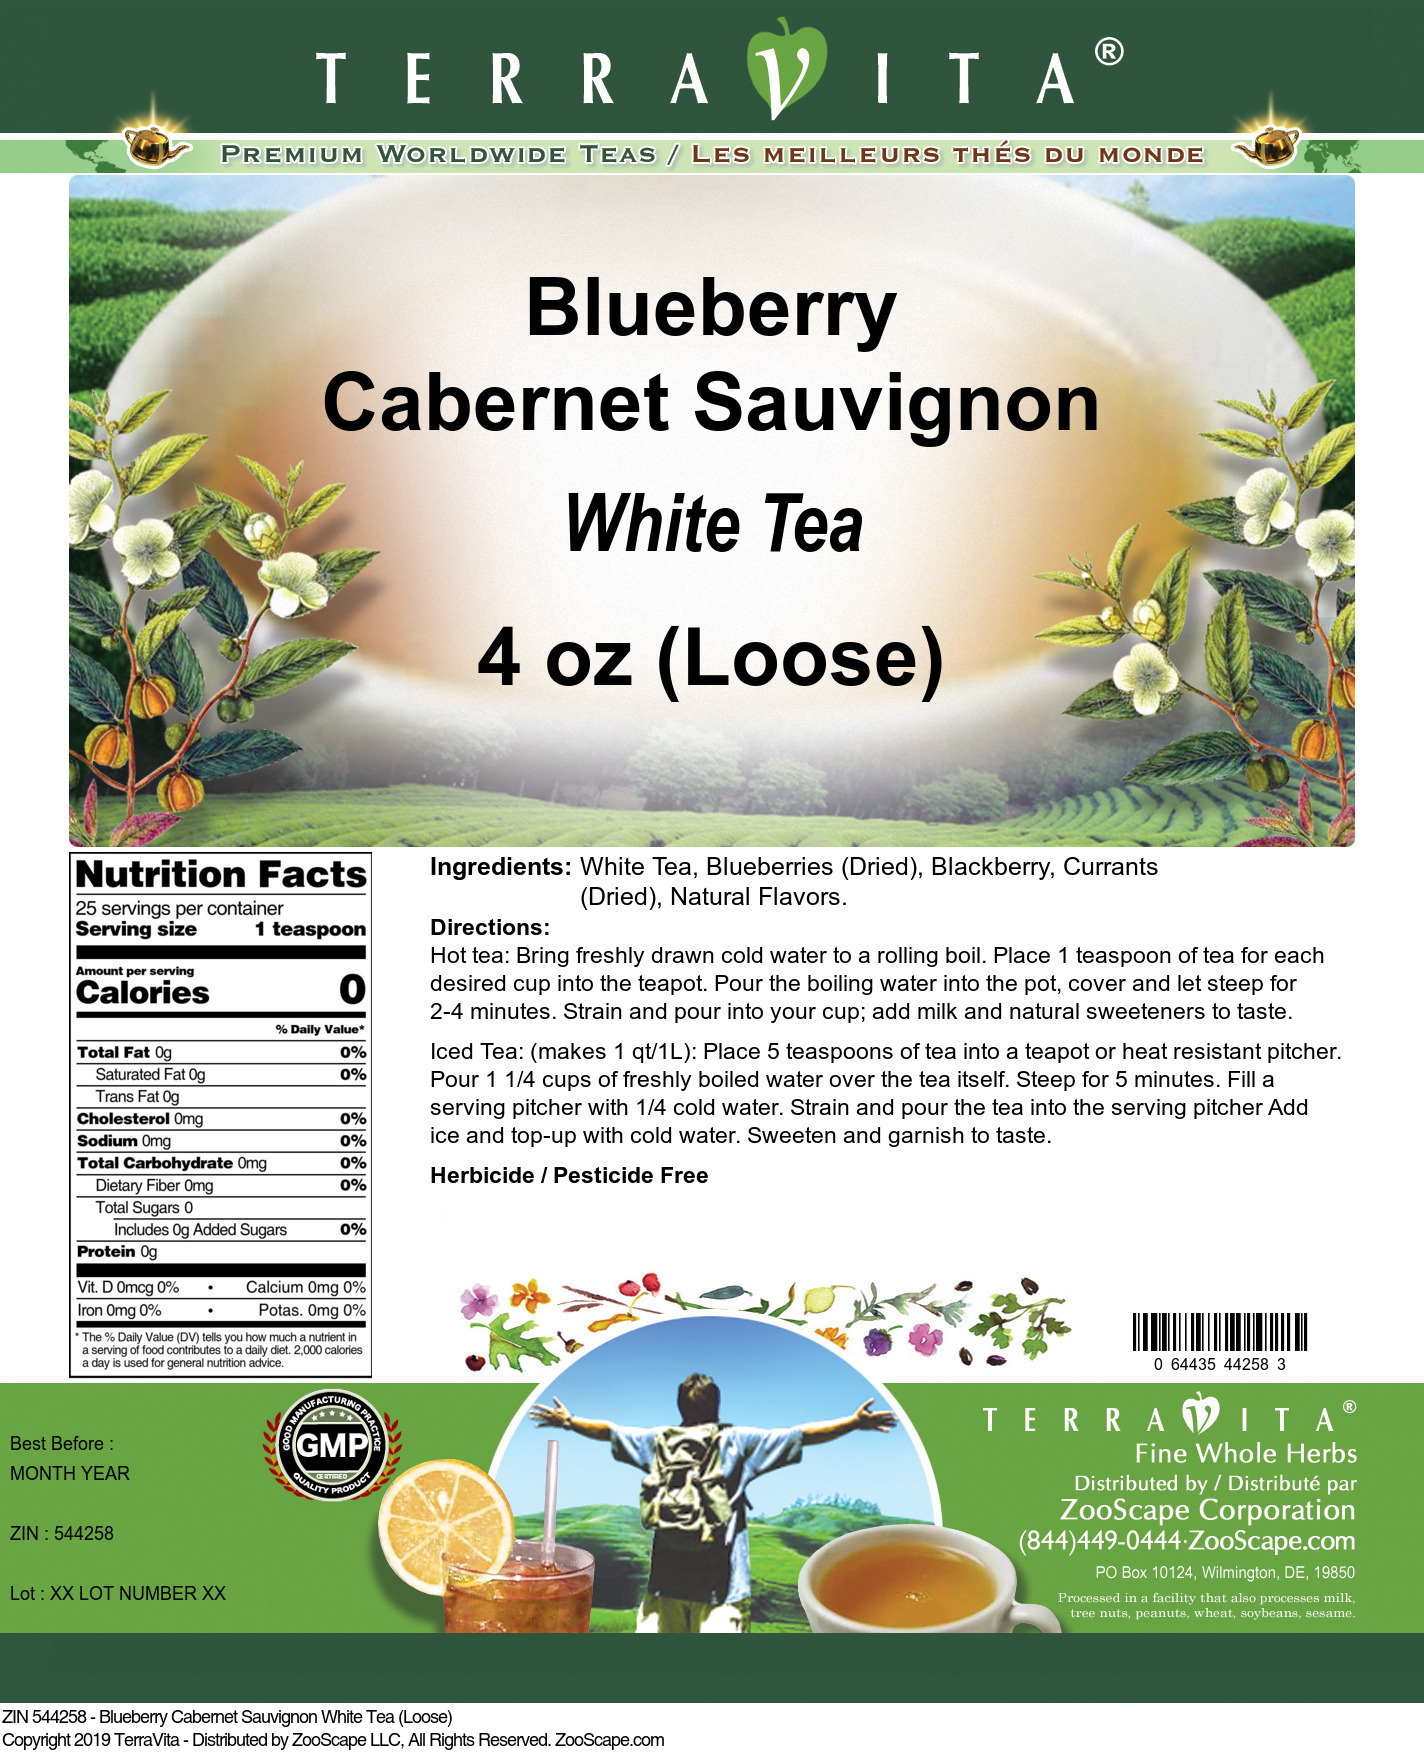 Blueberry Cabernet Sauvignon White Tea (Loose) - Label